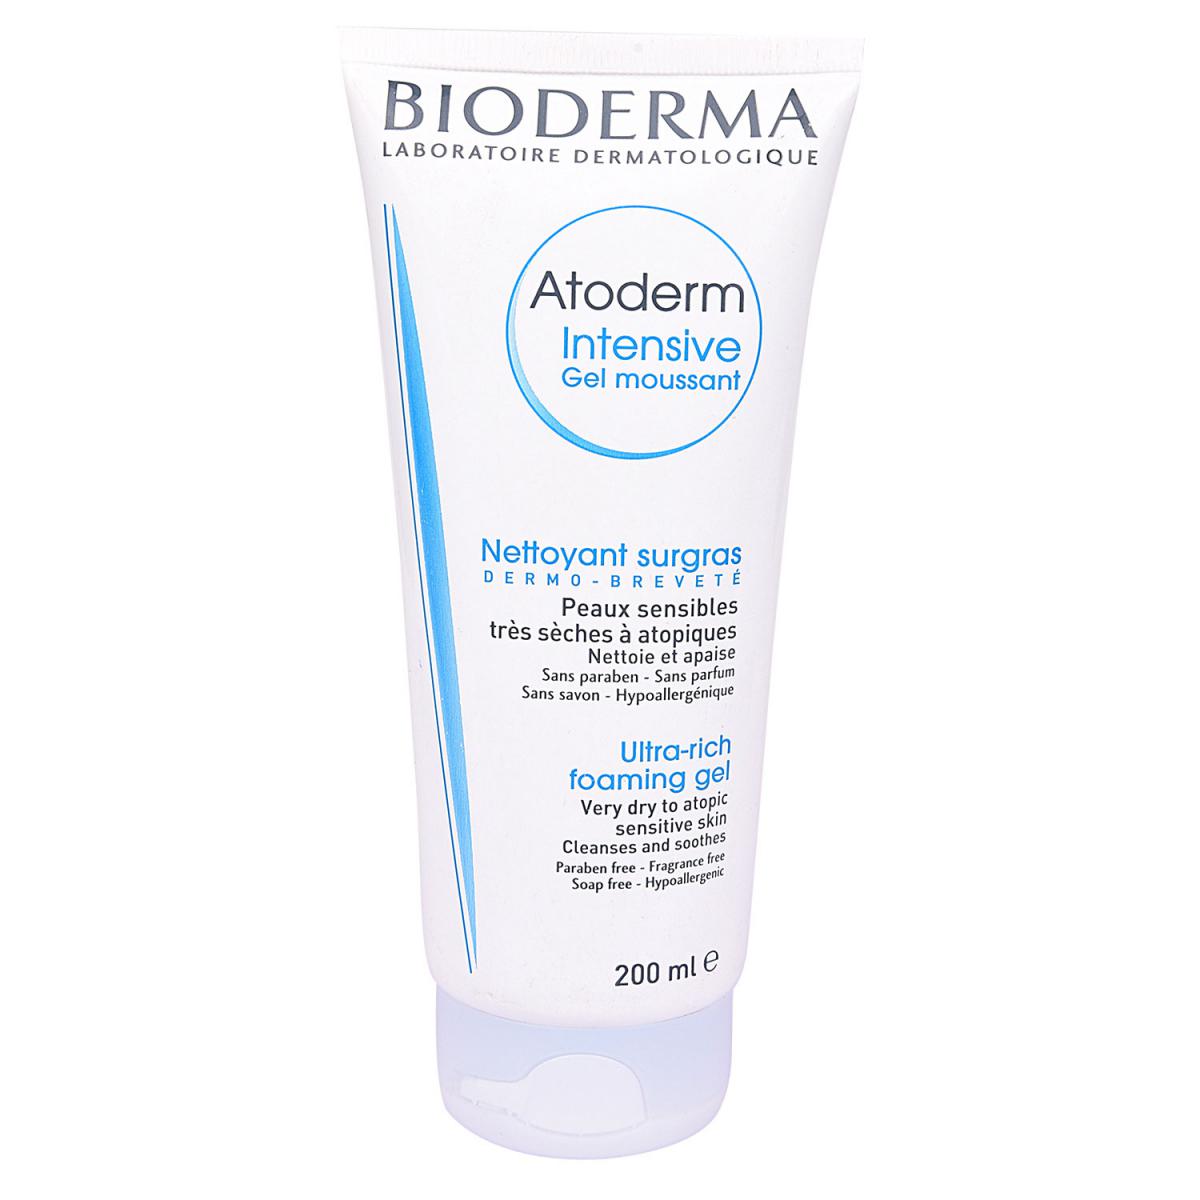 فومینگ ژل مناسب پوست های خیلی خشک - Bioderma Atoderm Intensive Moussant Foaming Gel For Very Dry, Atopic And Sensitive Skins 200 ml